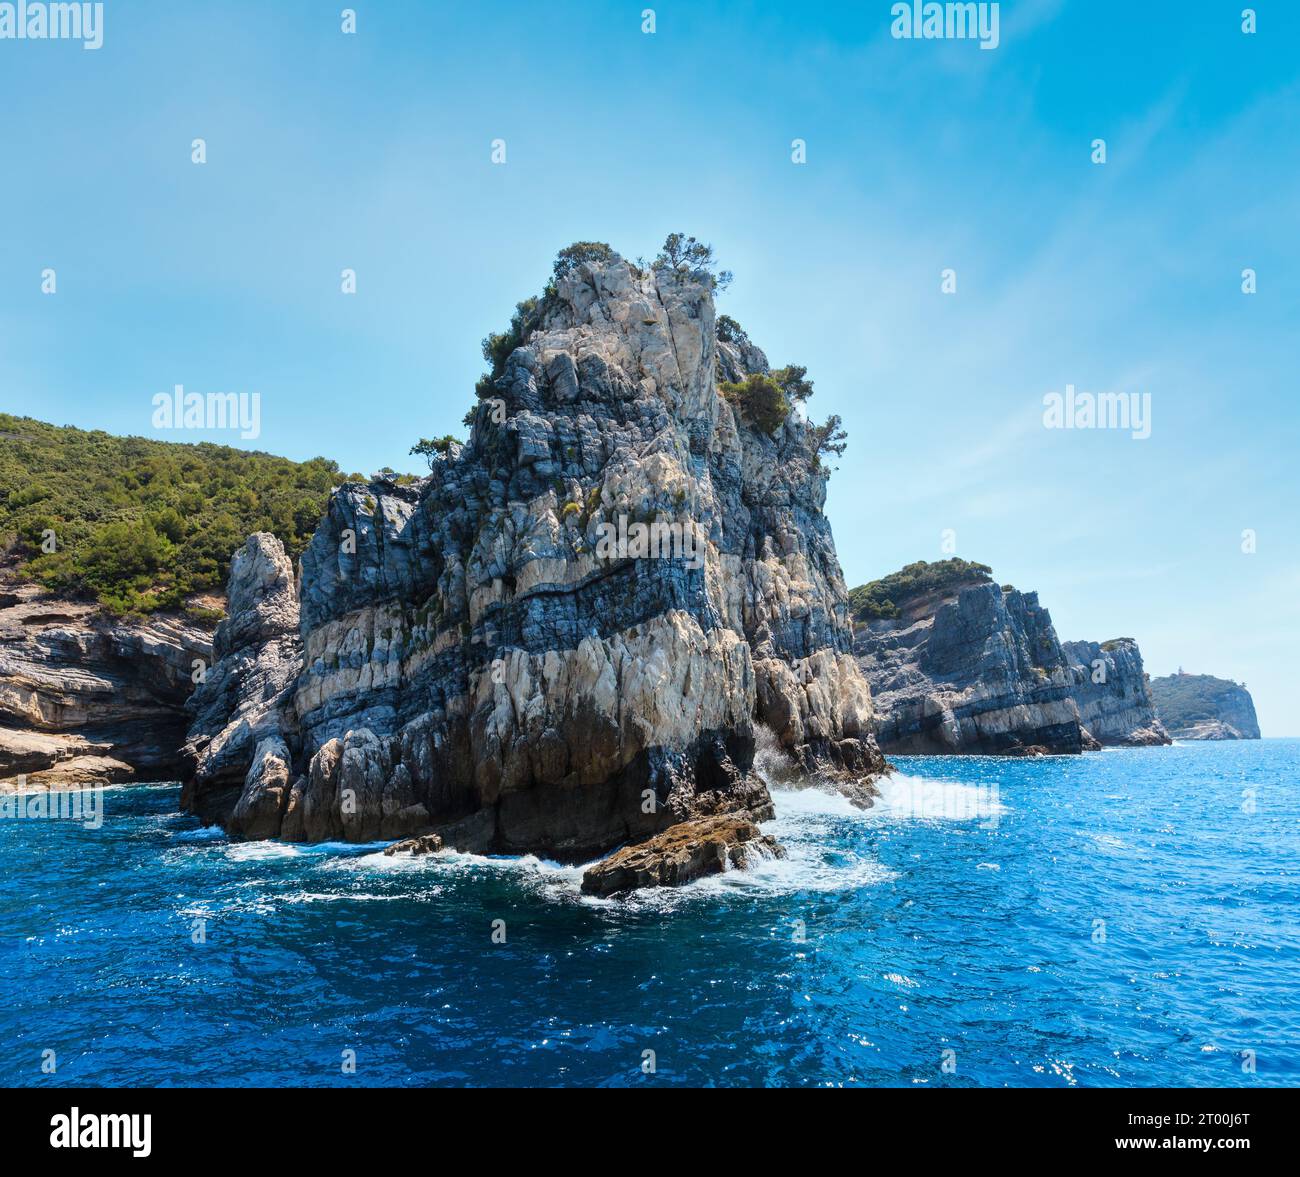 Palmaria island, La Spezia, Italy Stock Photo